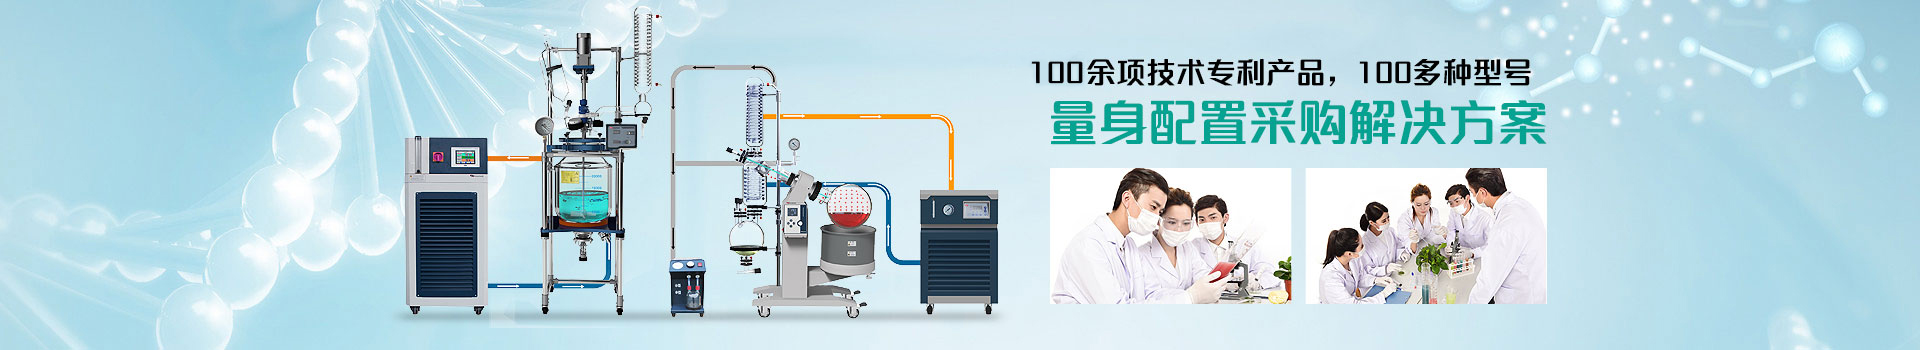 jnh官网仪器100余项技术专利产品，100多种型号